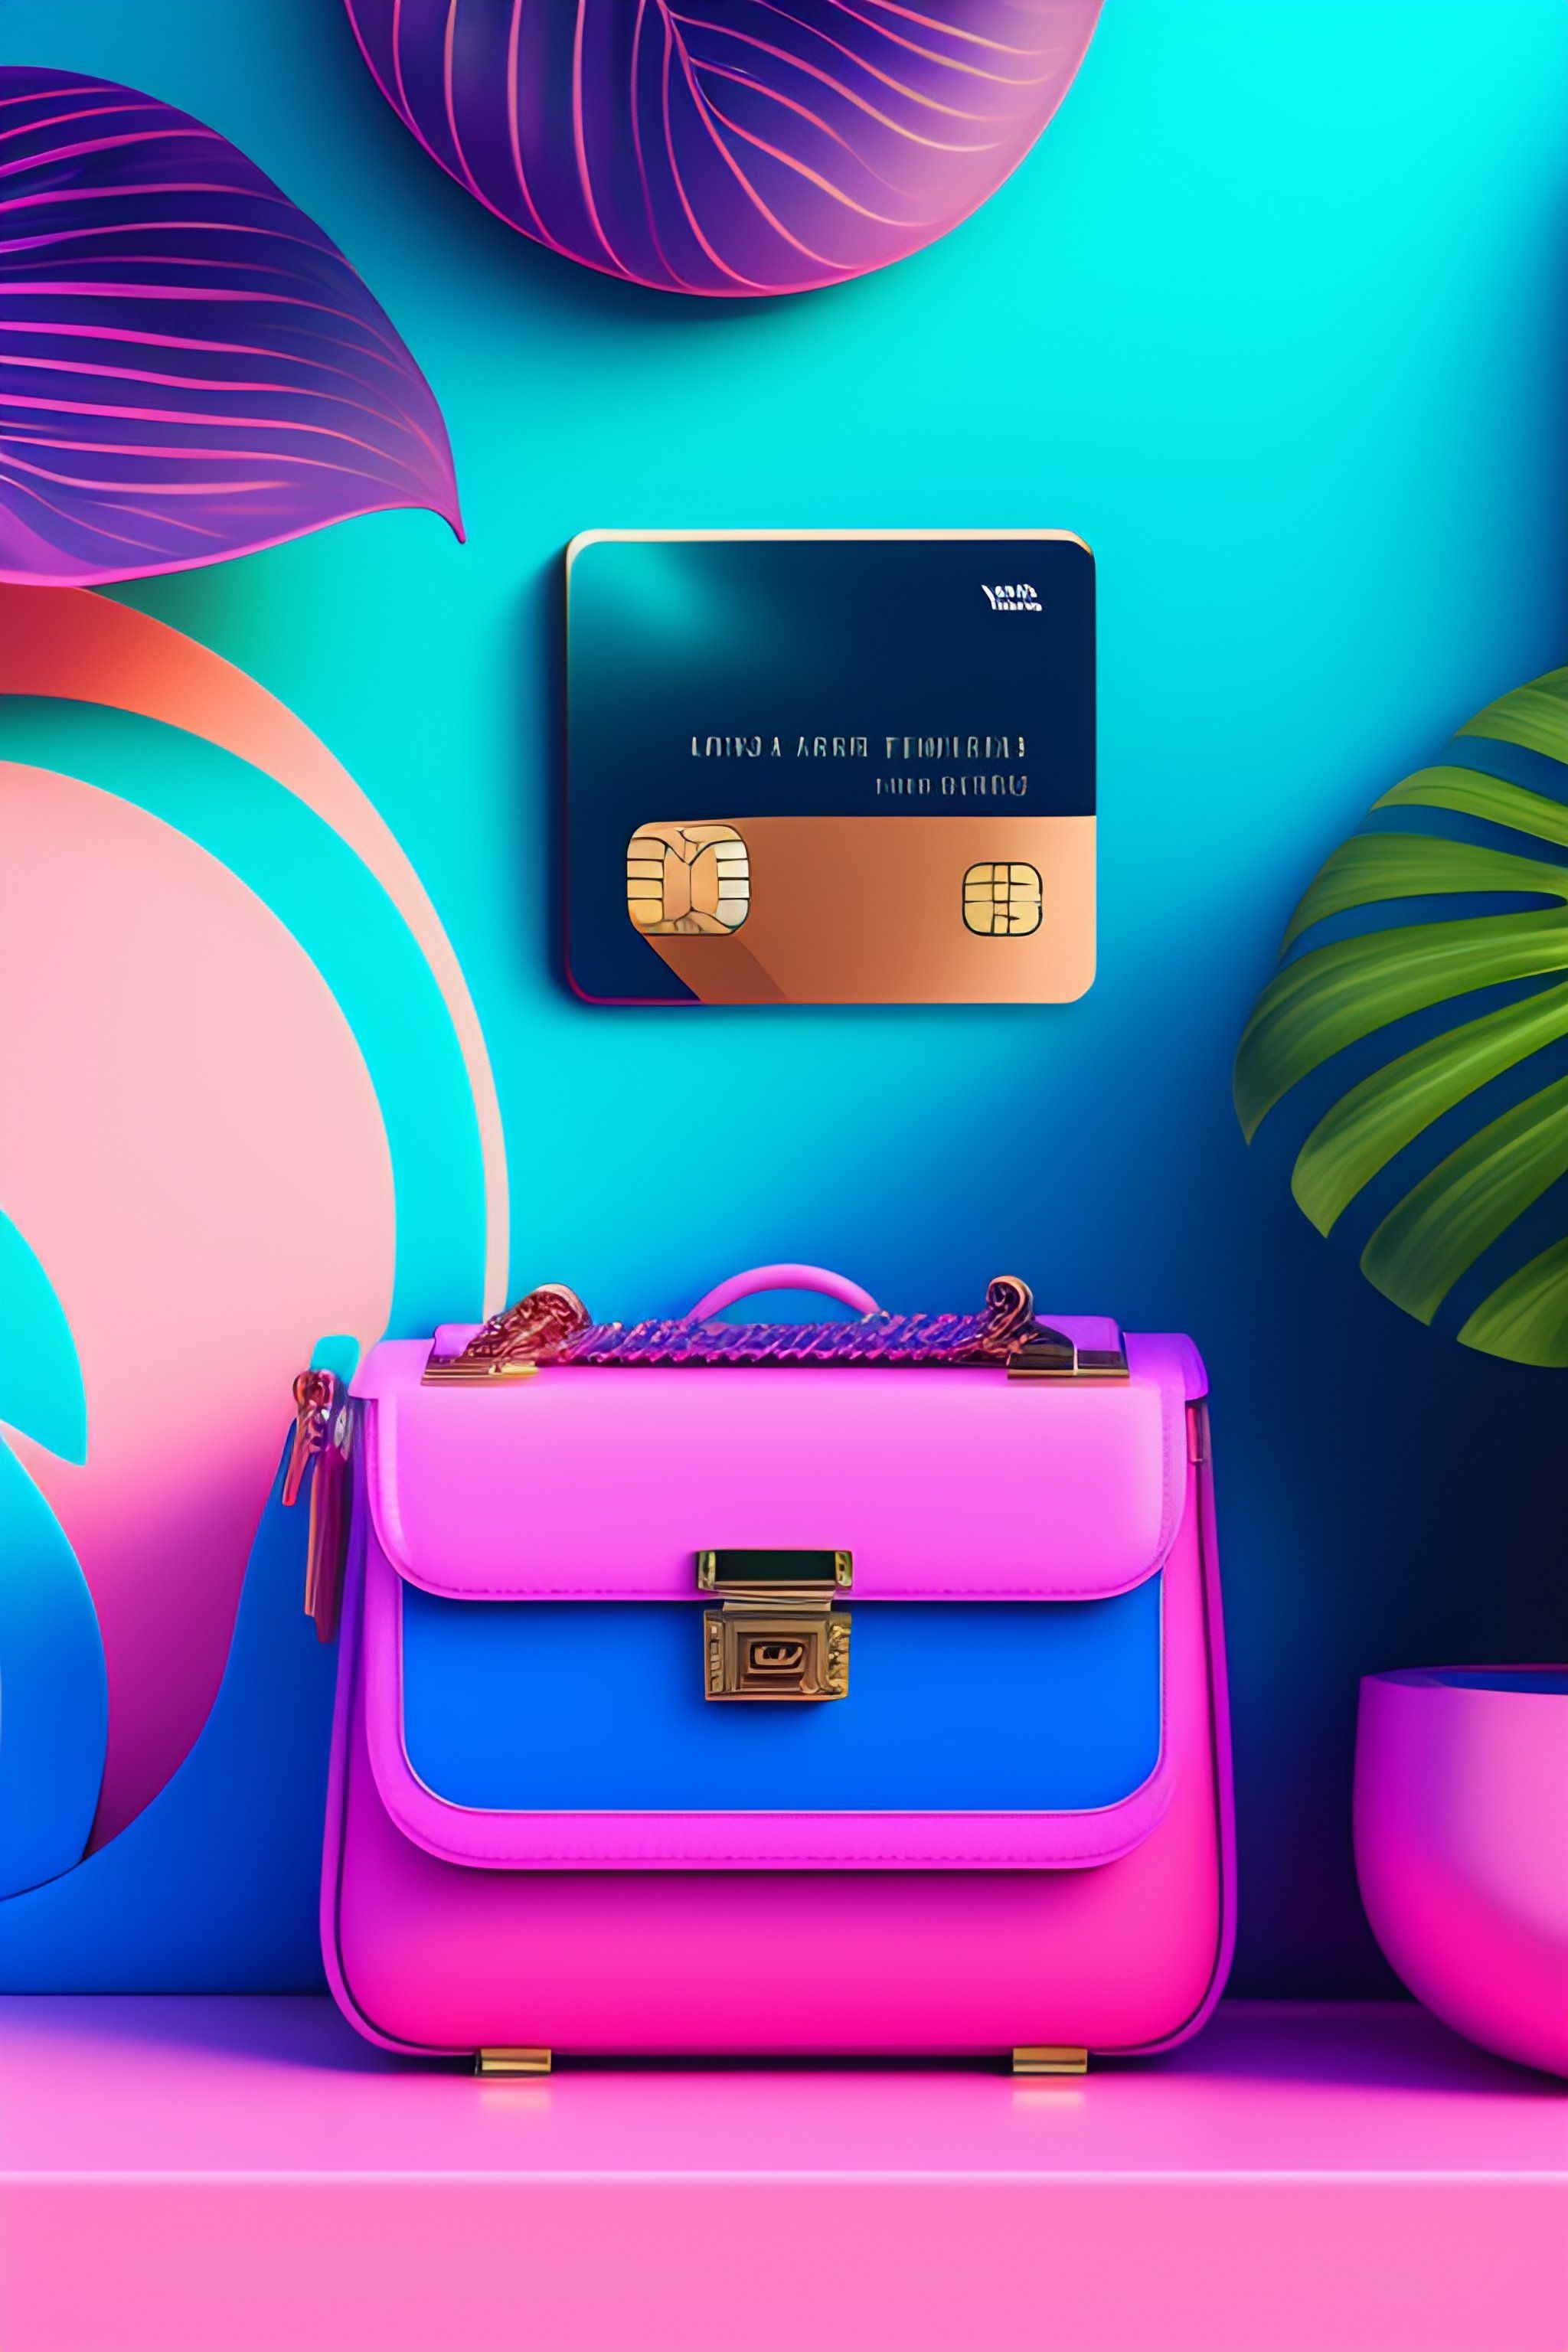  Visa Hintergrundbild 2048x3072. Lexica portrait agency of the future, tropical handbag, credit card, wallpaper in vaporwave aesthetic, photorealistic, blue and pink